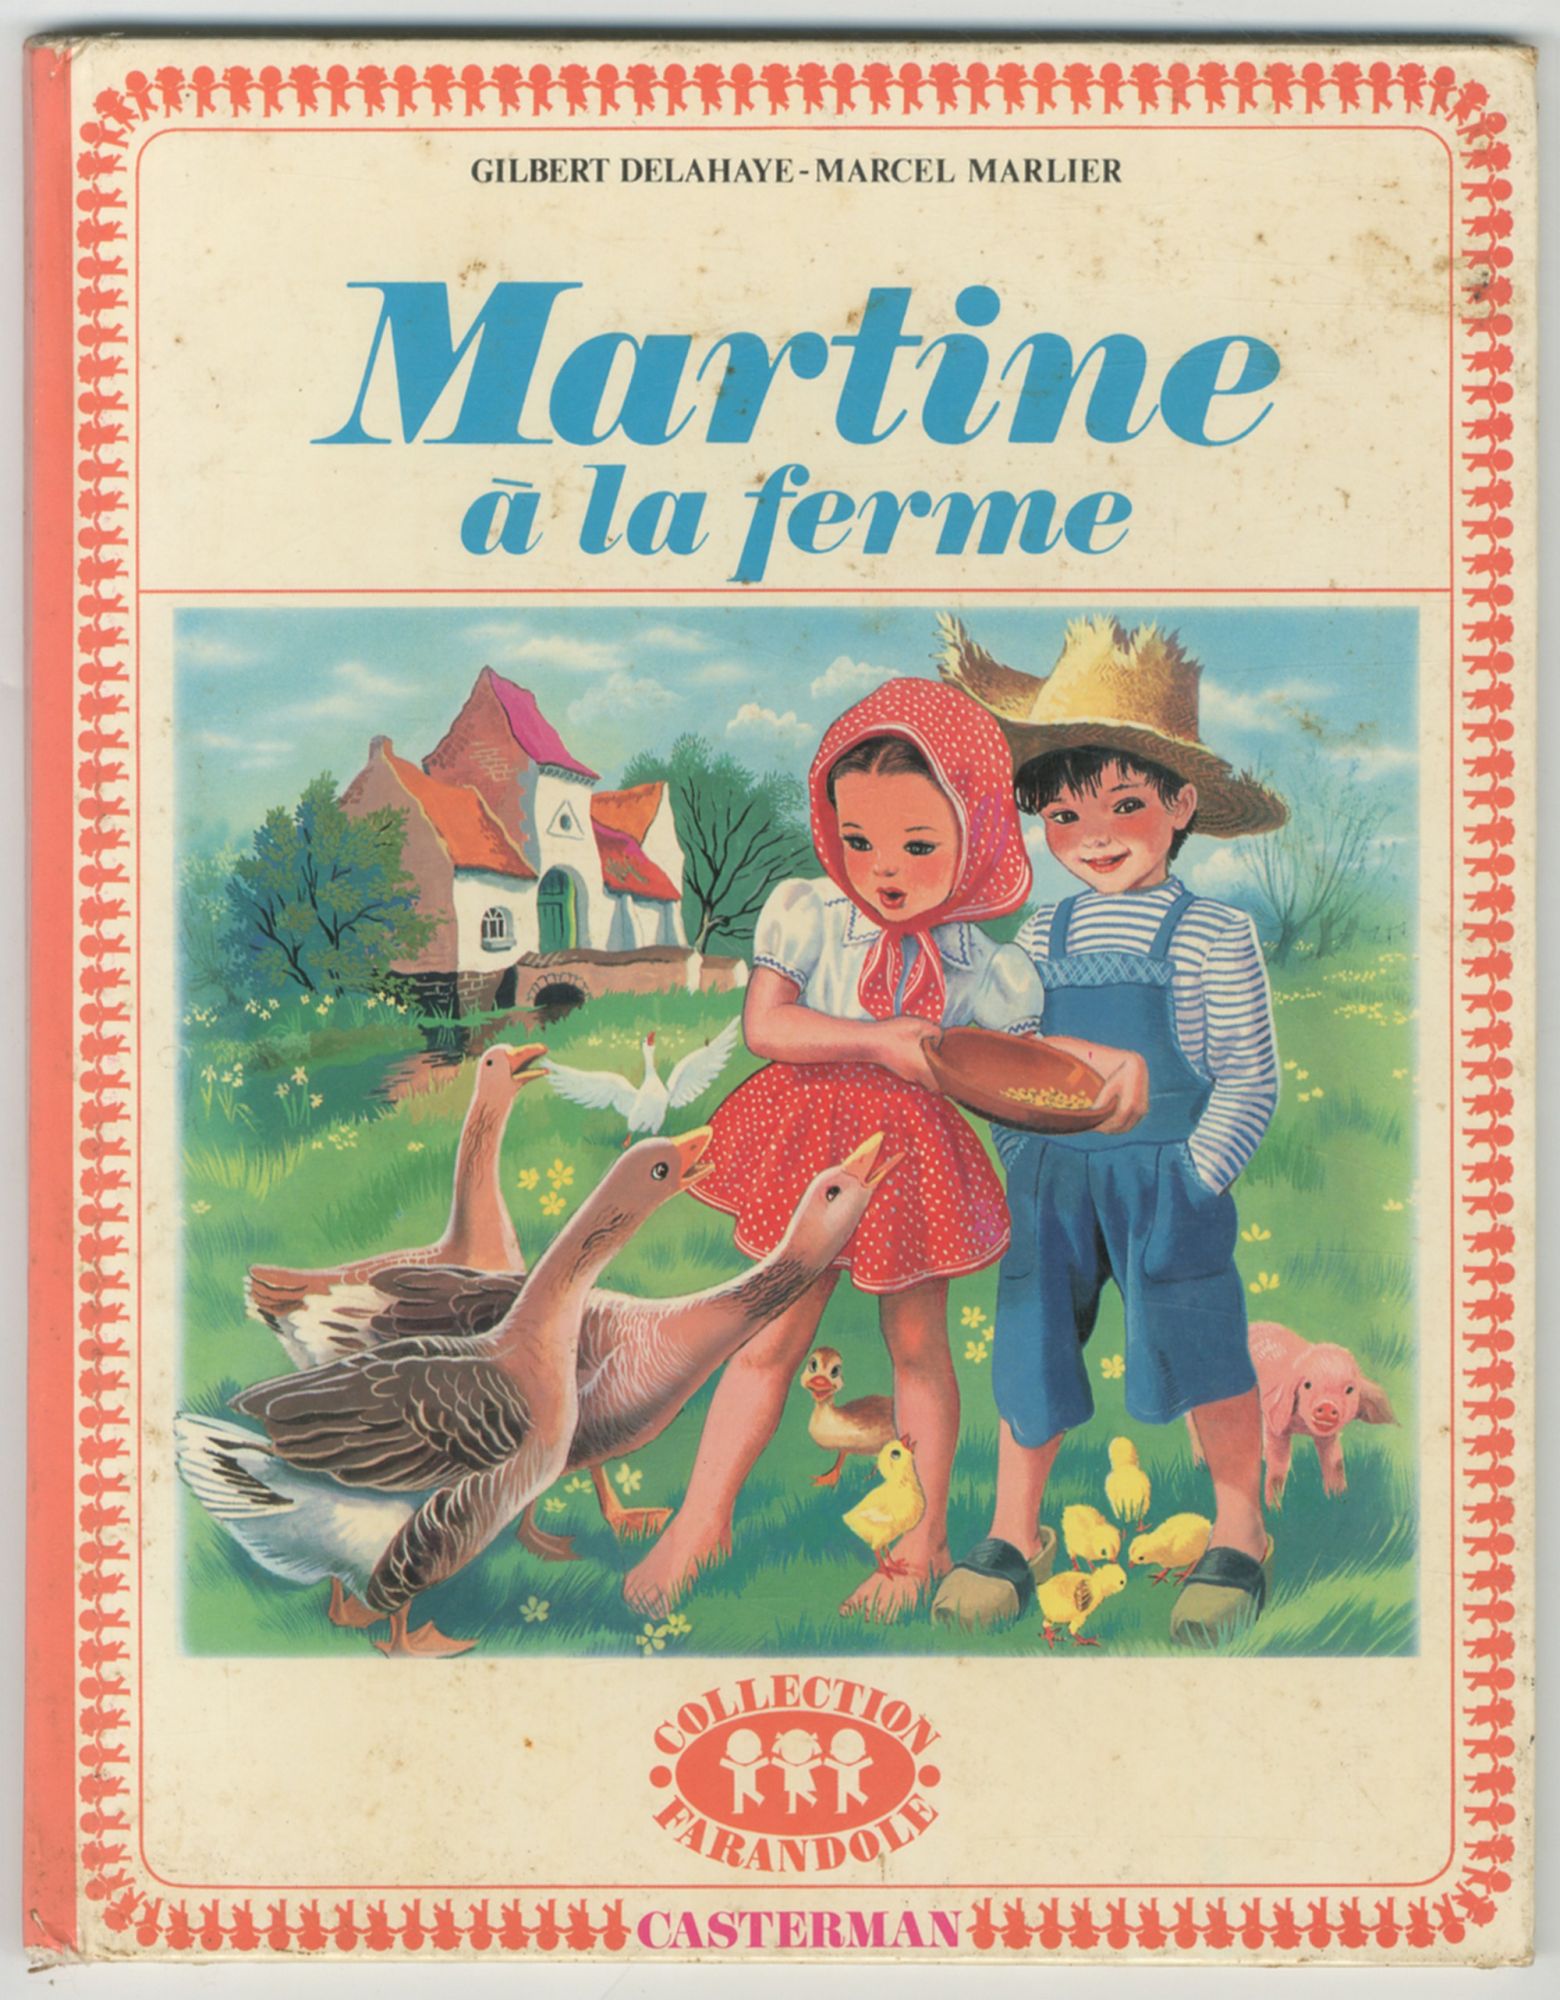 Martine A La Ferme Collection Farandole By Delahaye Gilbert And Marcel Marlier Very Good